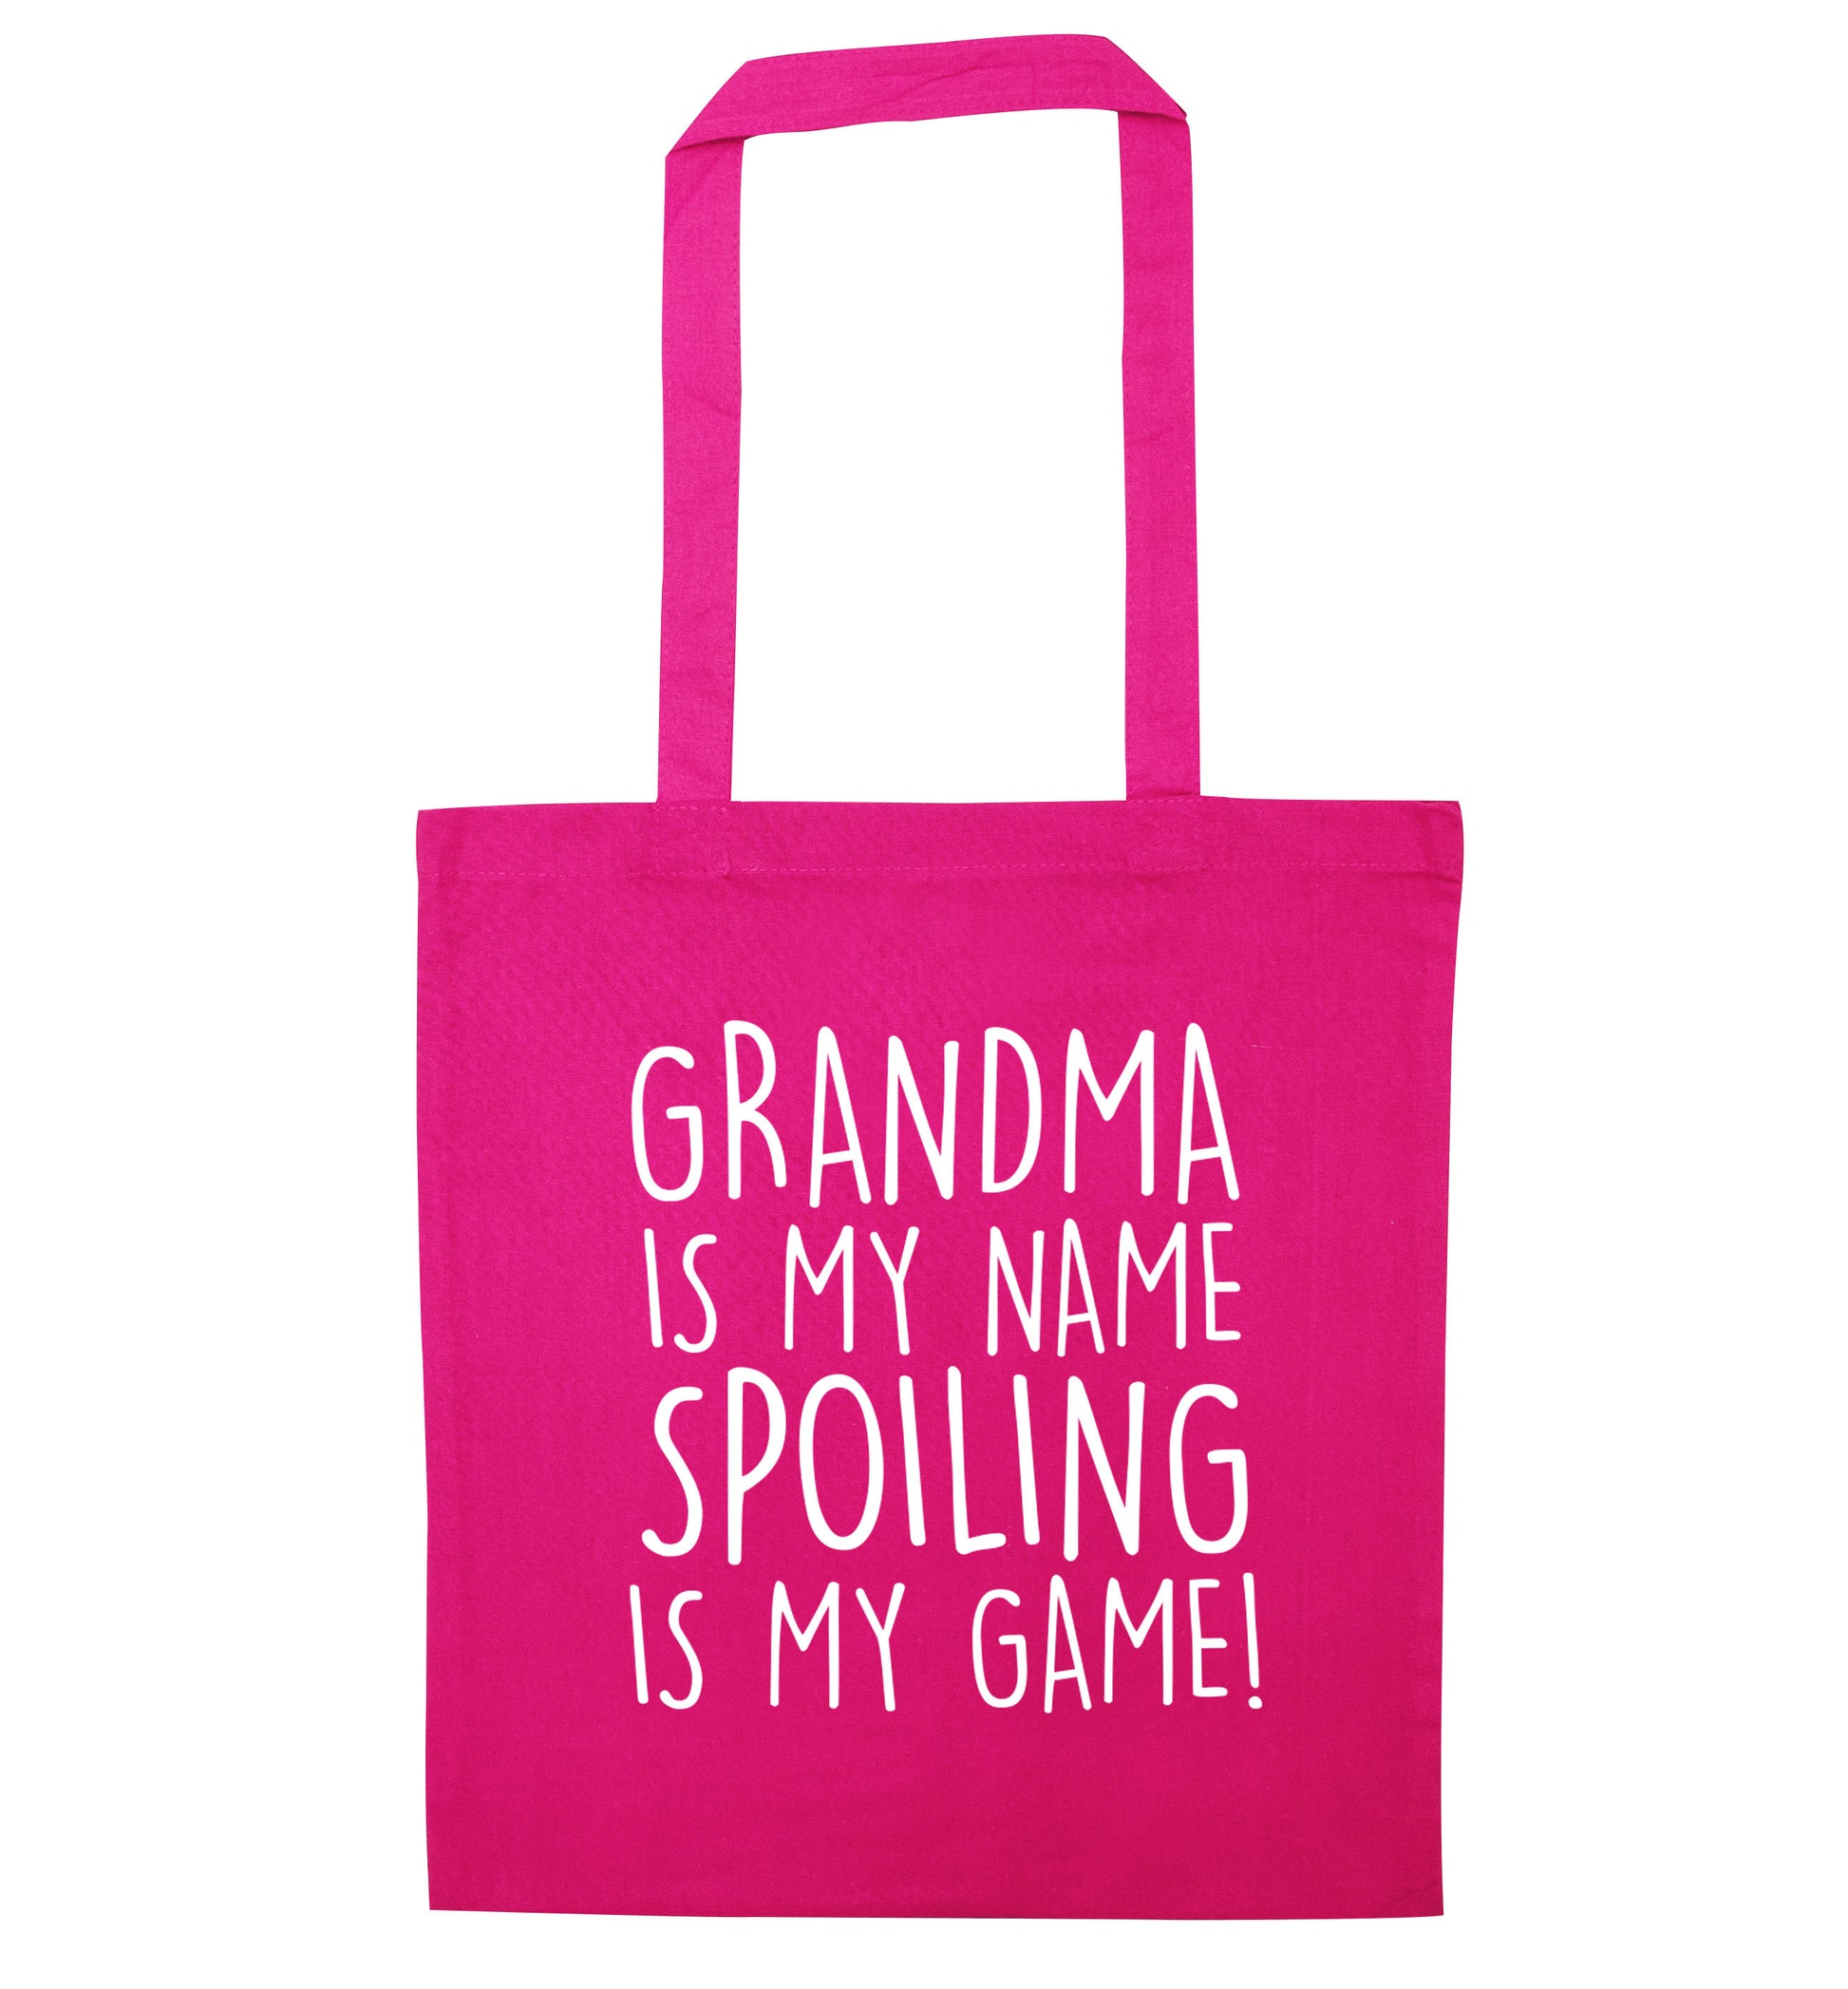 Grandma is my name, spoiling is my game pink tote bag